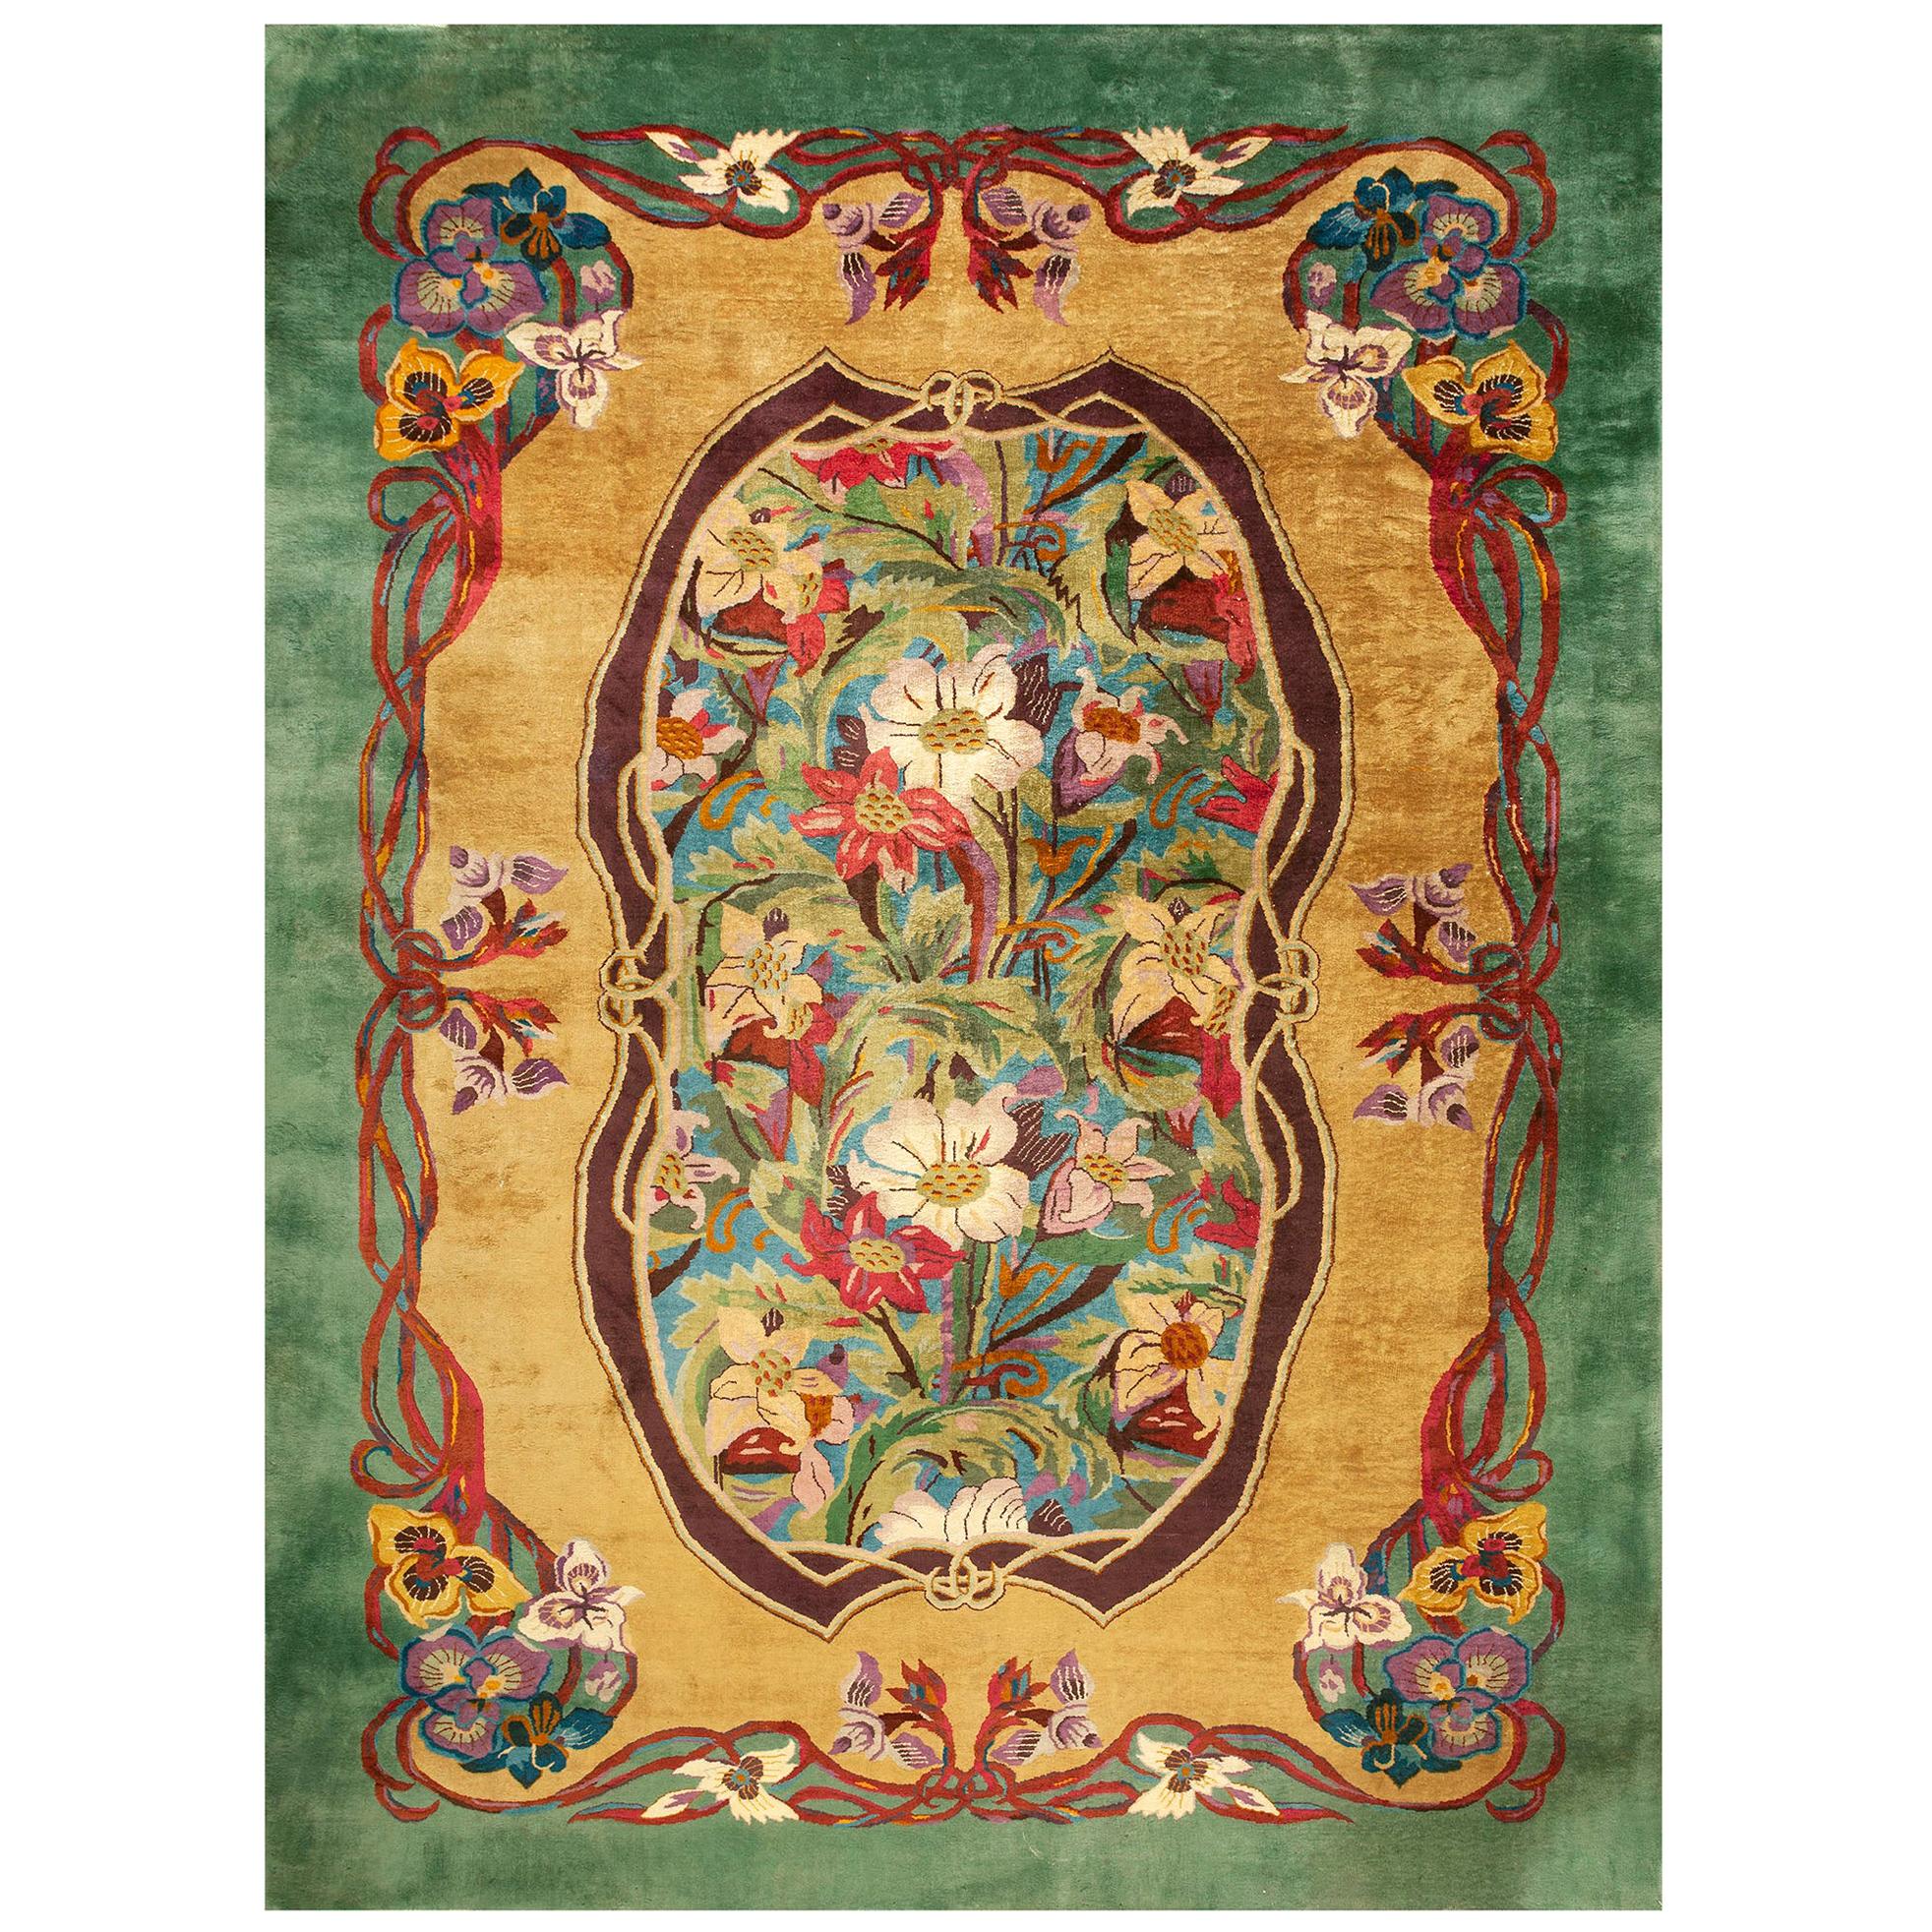 1920s Chinese Art Deco Carpet ( 9' 10" x 13' 4" - 300 x 405 cm ) For Sale